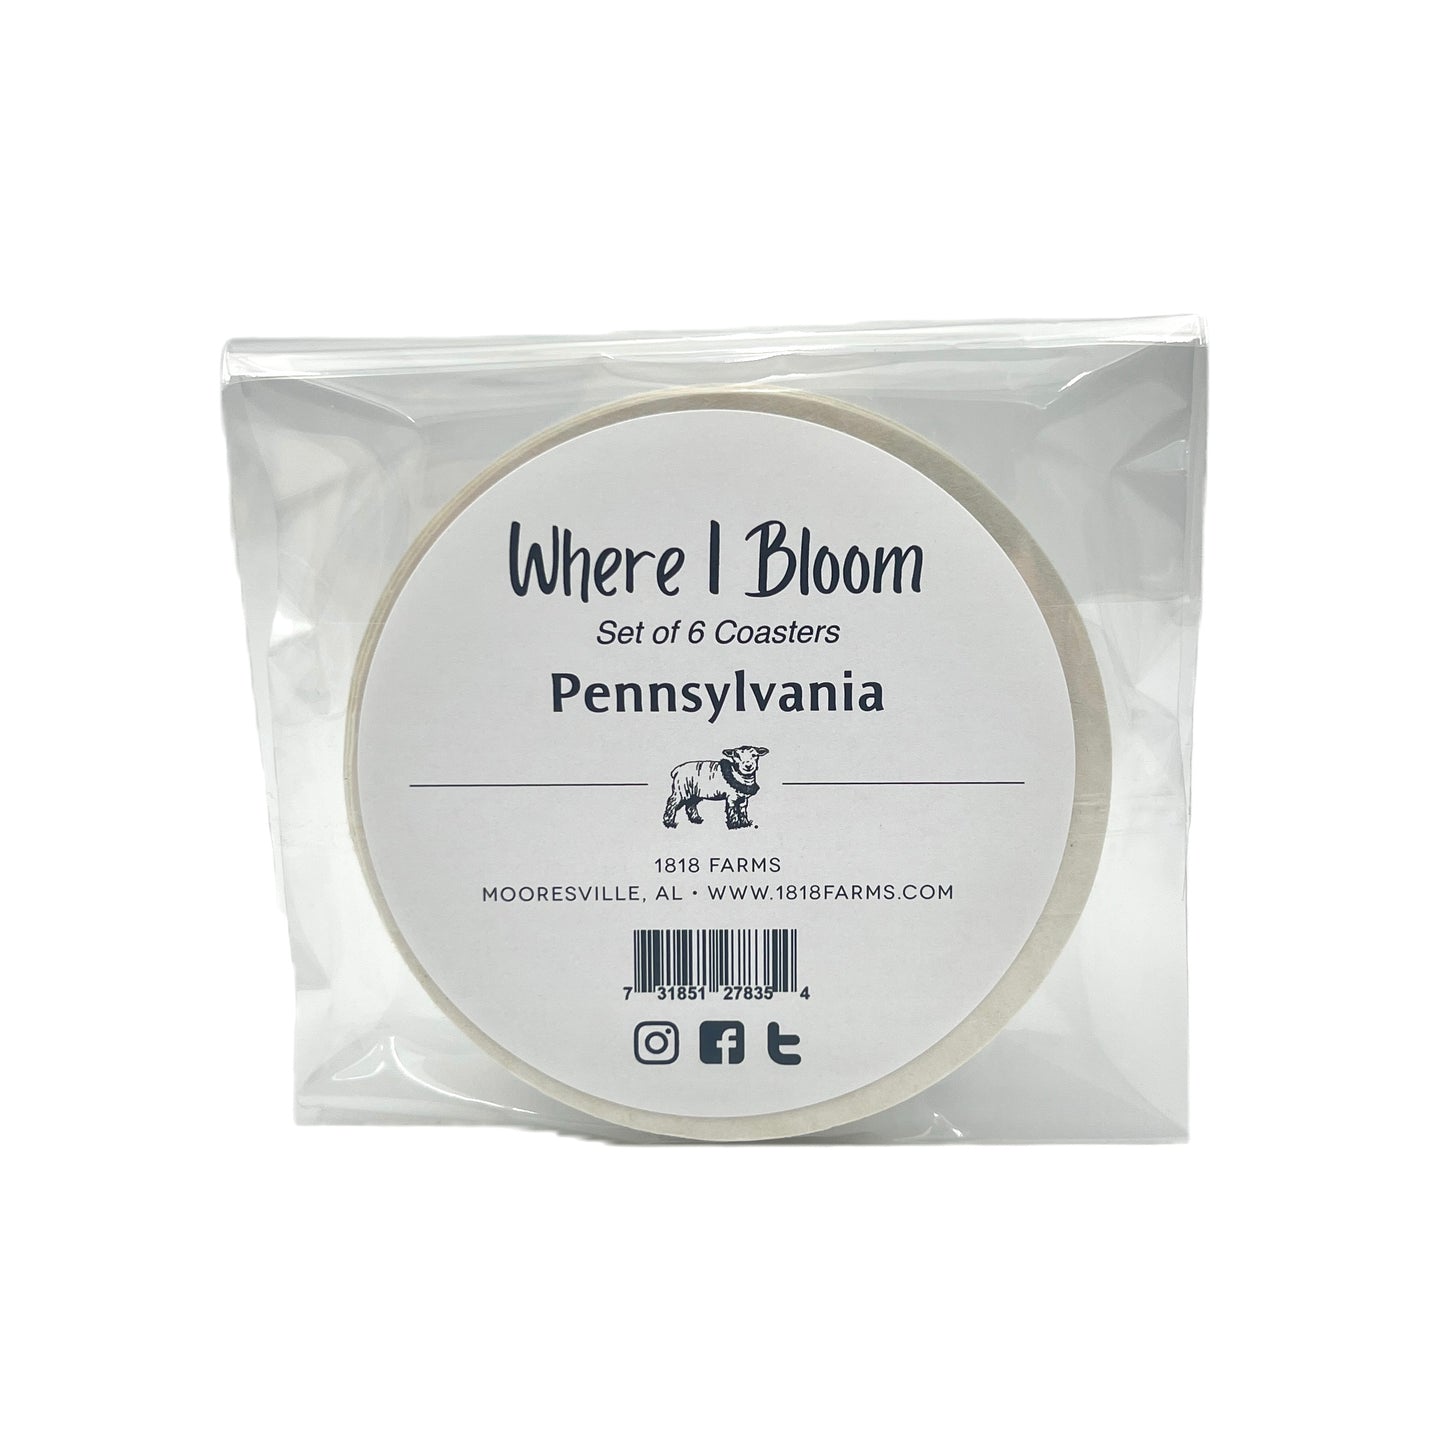 Pennsylvania Themed Coasters (Set of 6)  - "Where I Bloom" Collection Coaster 1818 Farms   